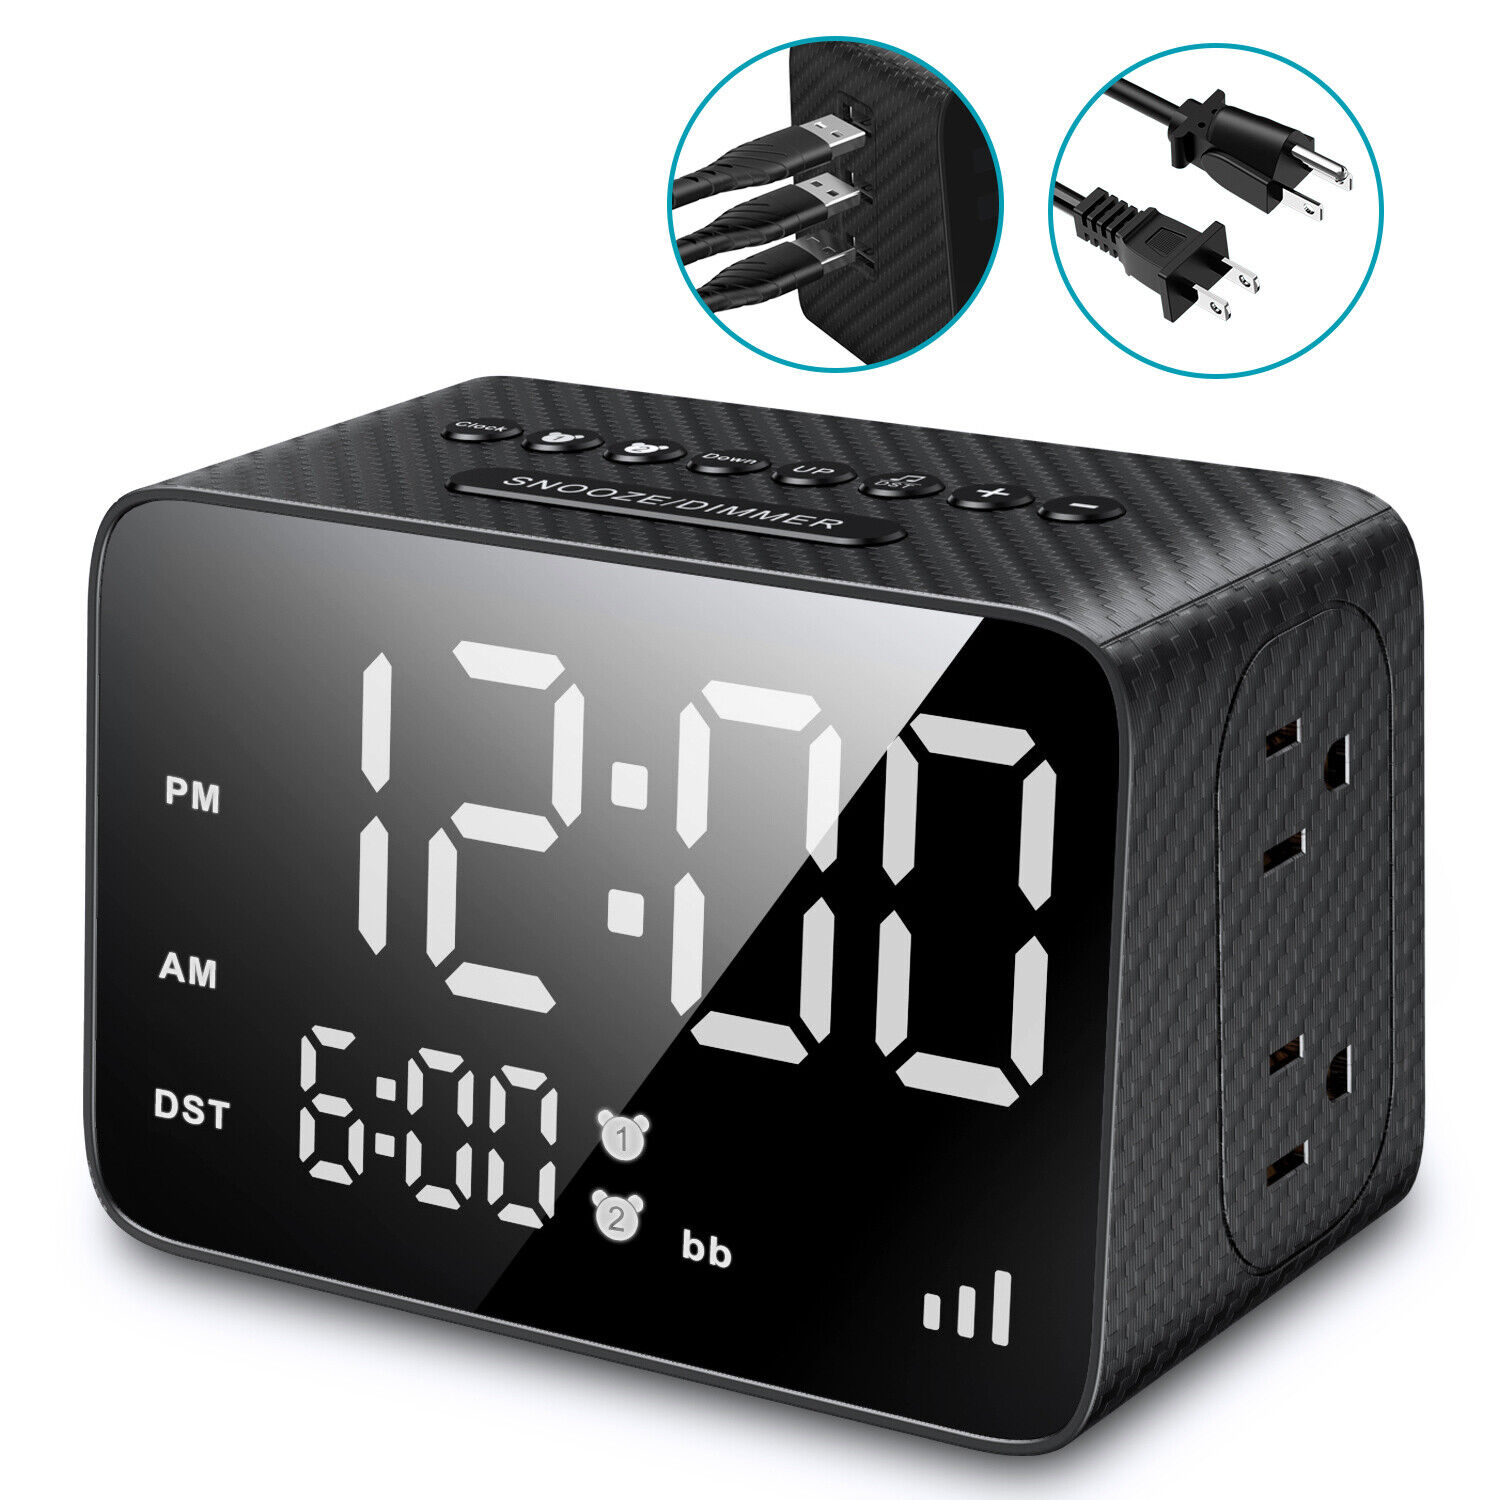 LED Display Alarm Clock White Noise Machine fr Baby Adult Sleeping+3USB&2AC Port